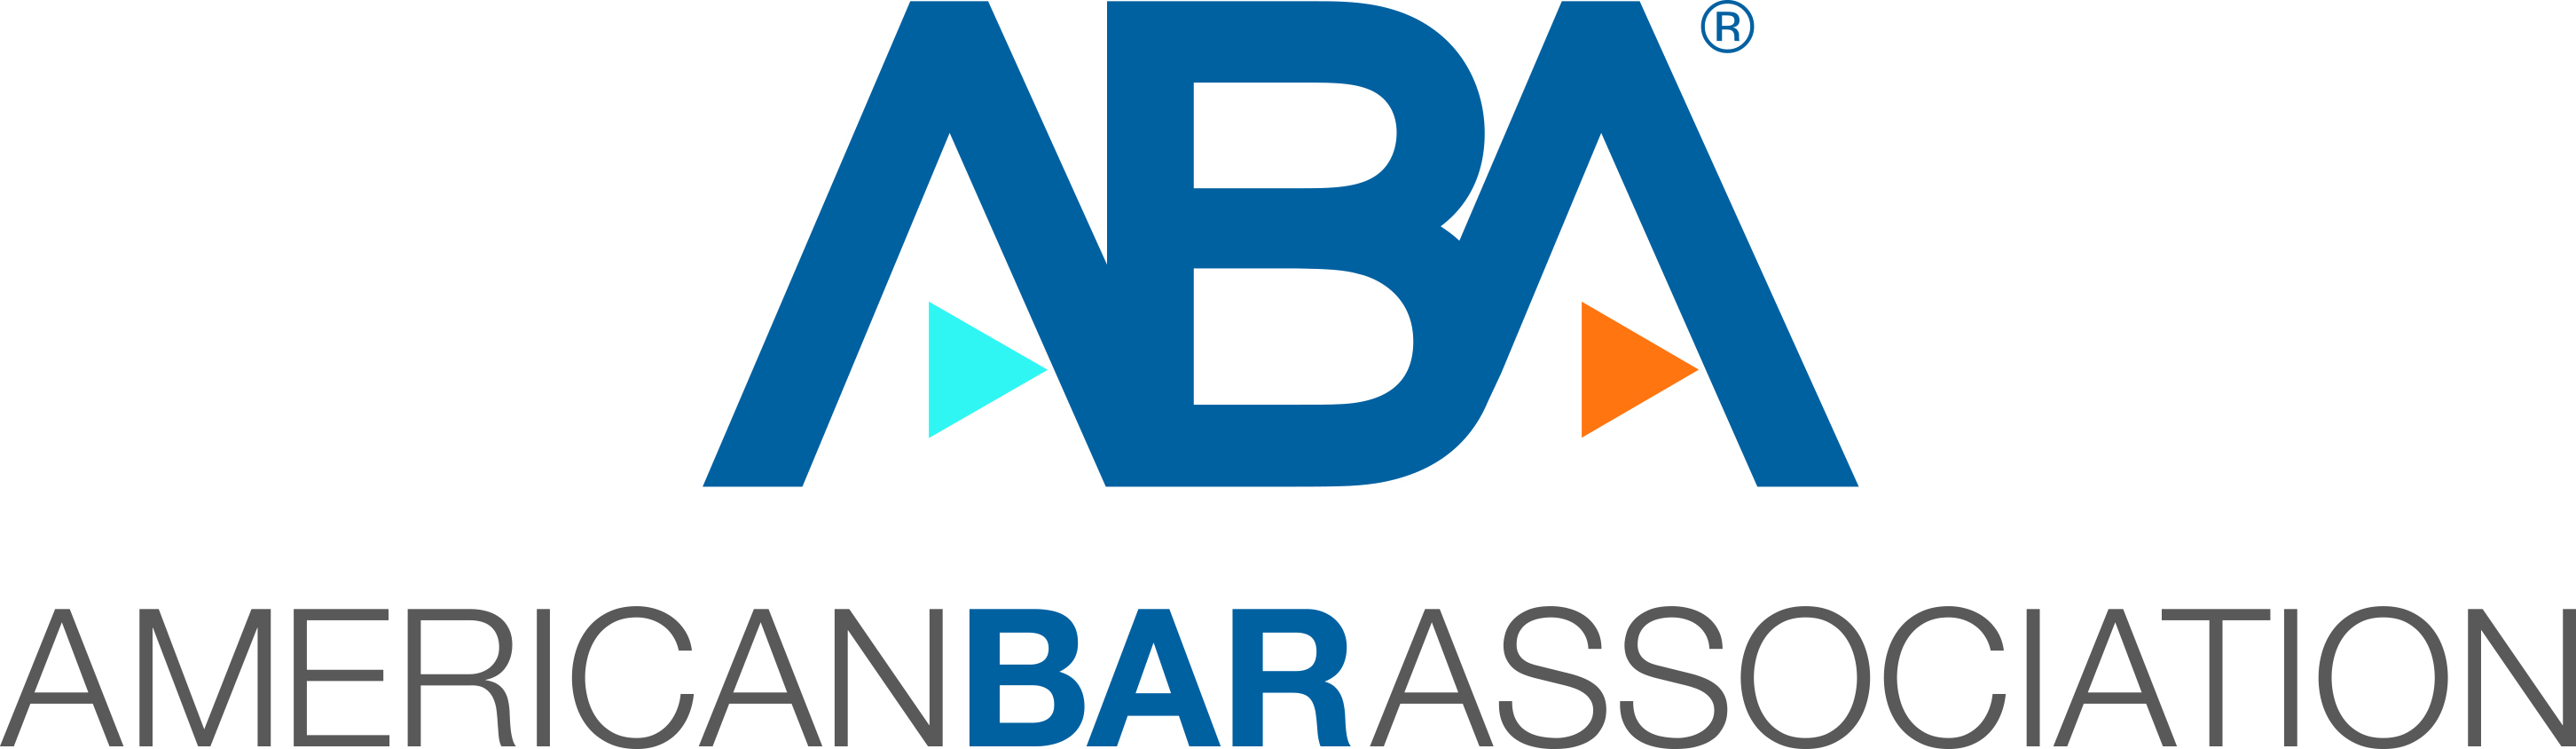 american bar association logo